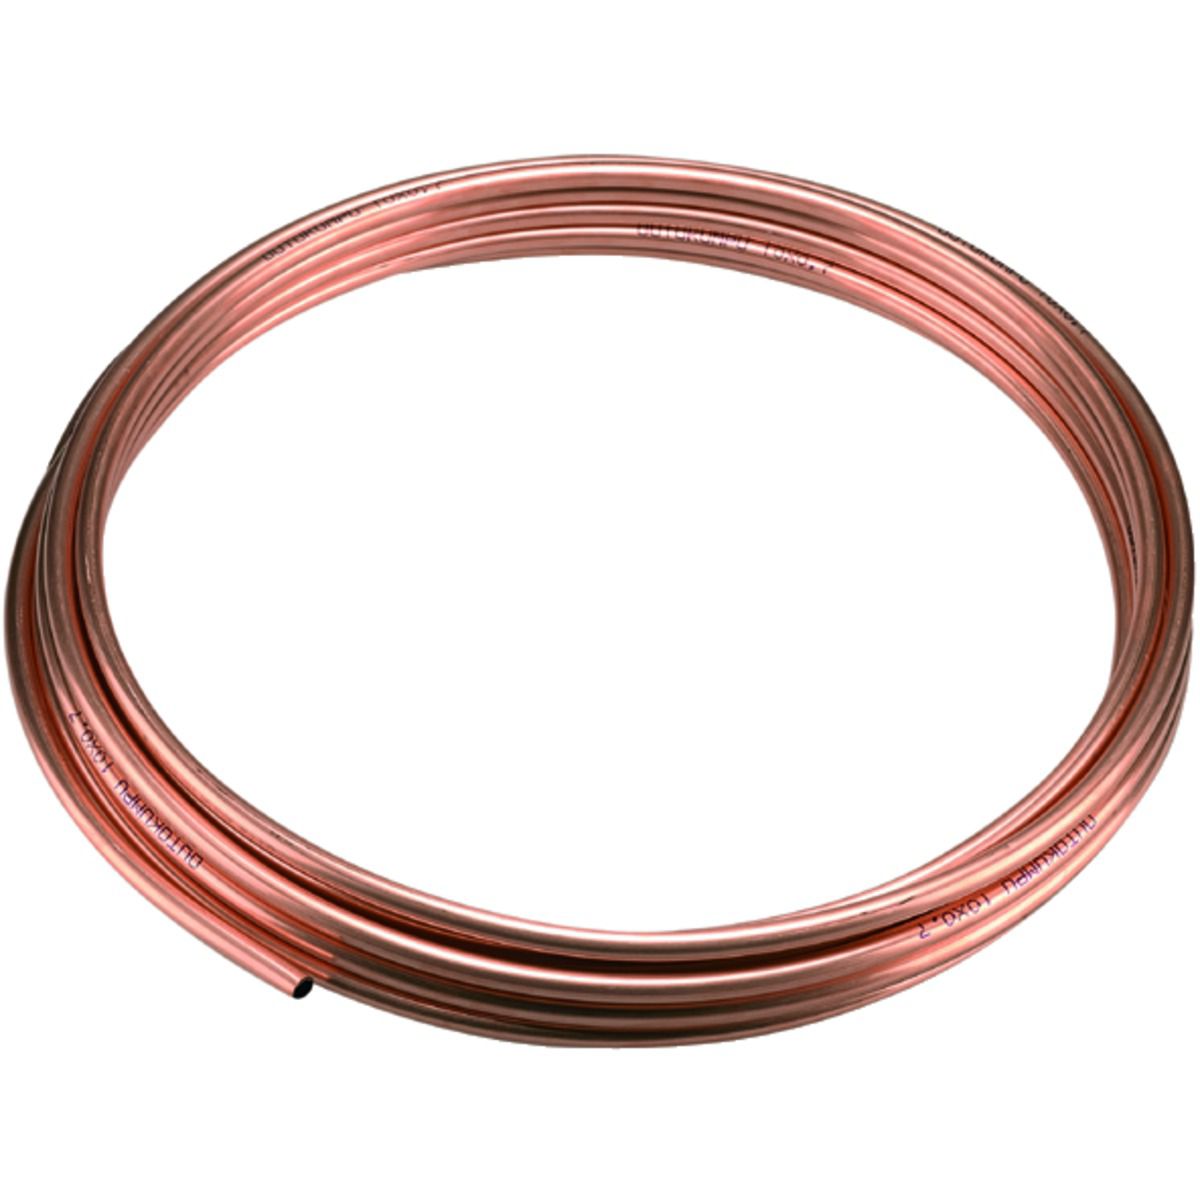 Image of Wednesbury Microbore Copper Pipe - 10mm x 10m